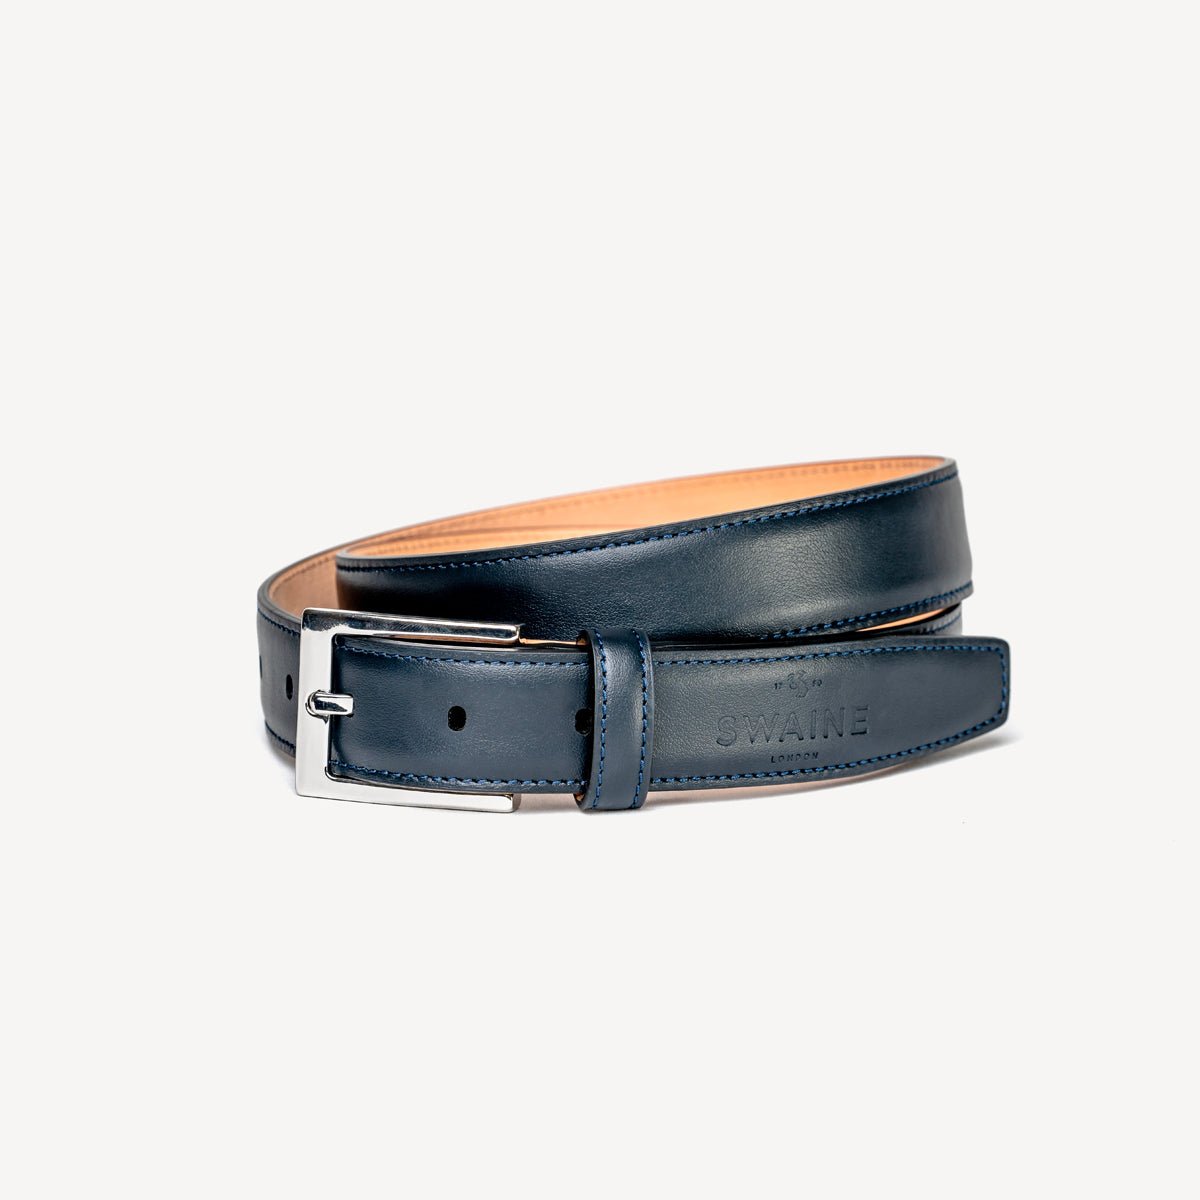 Men's Leather Belt - Navy - Swaine